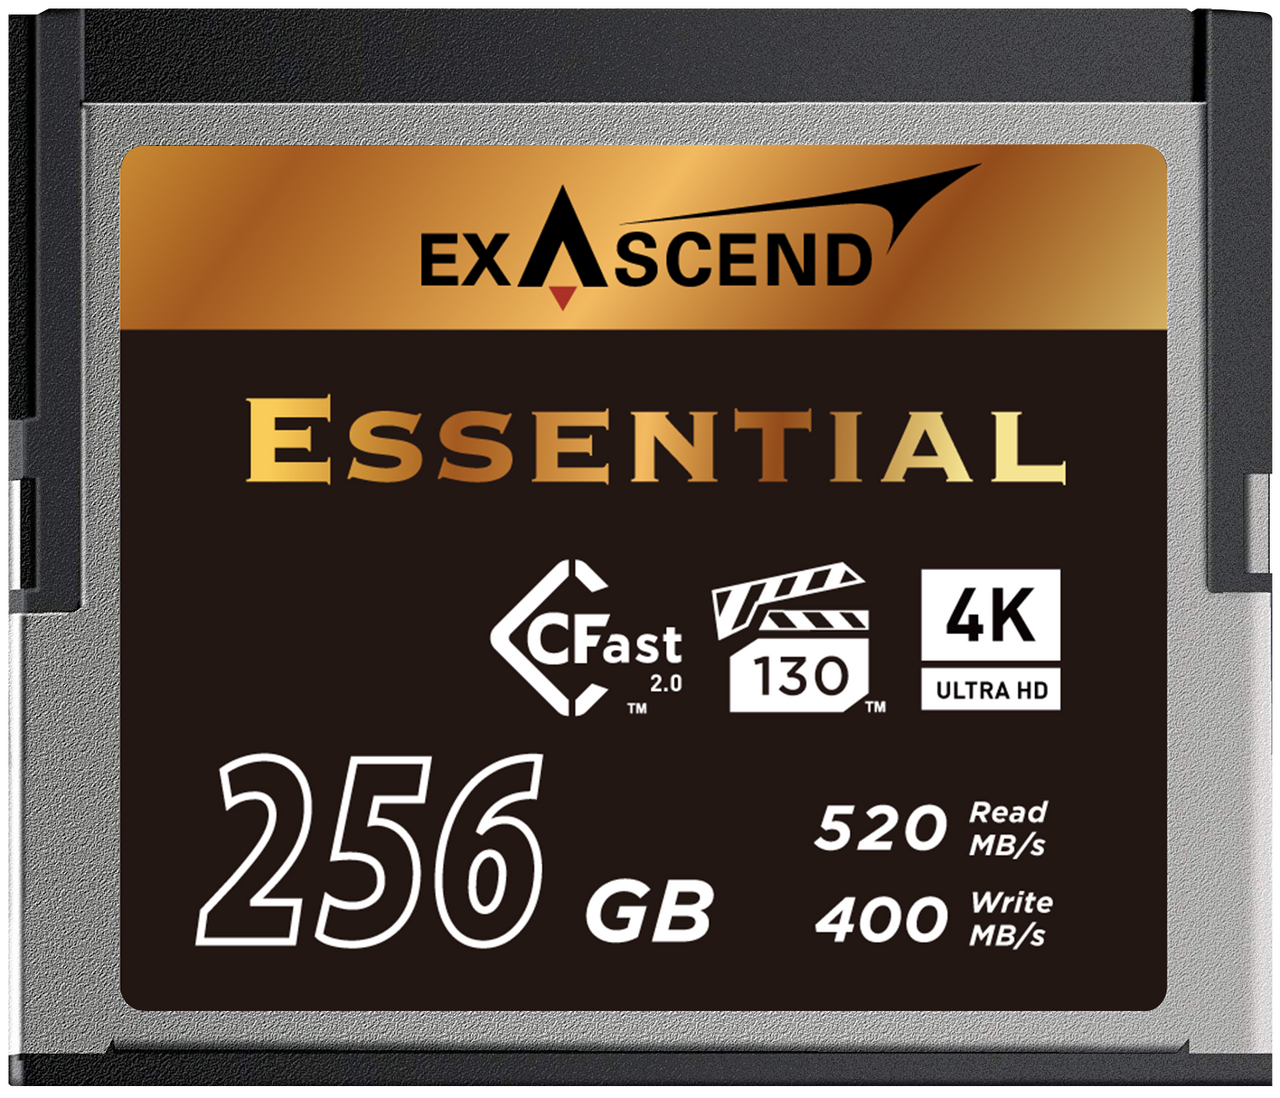 Exascend CFast 2.0 : Essential Series (256 GB)